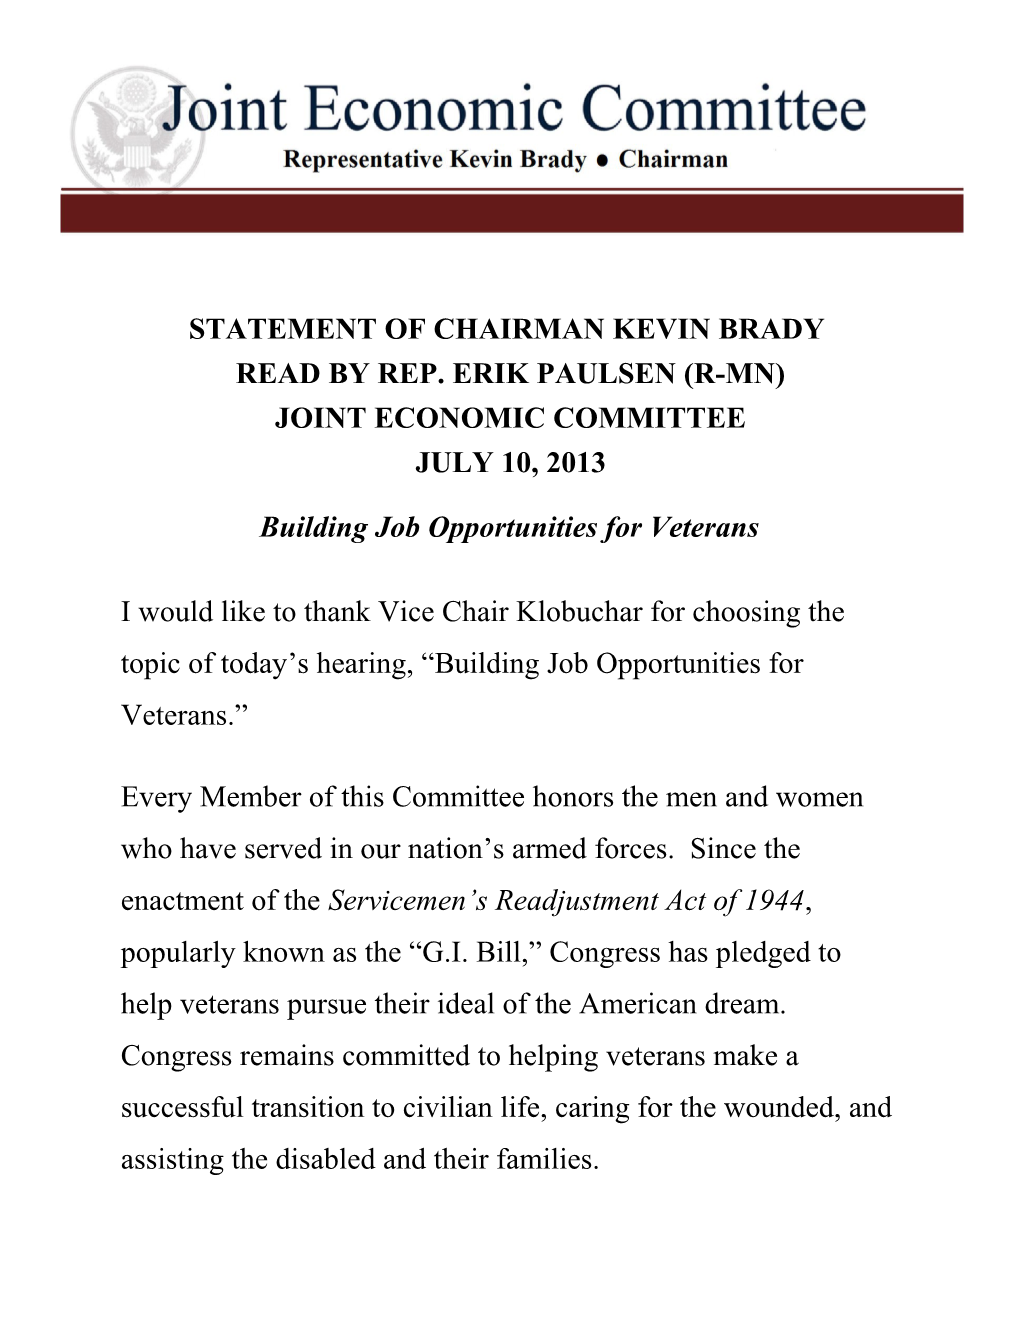 Statement of Chairman Kevin Brady